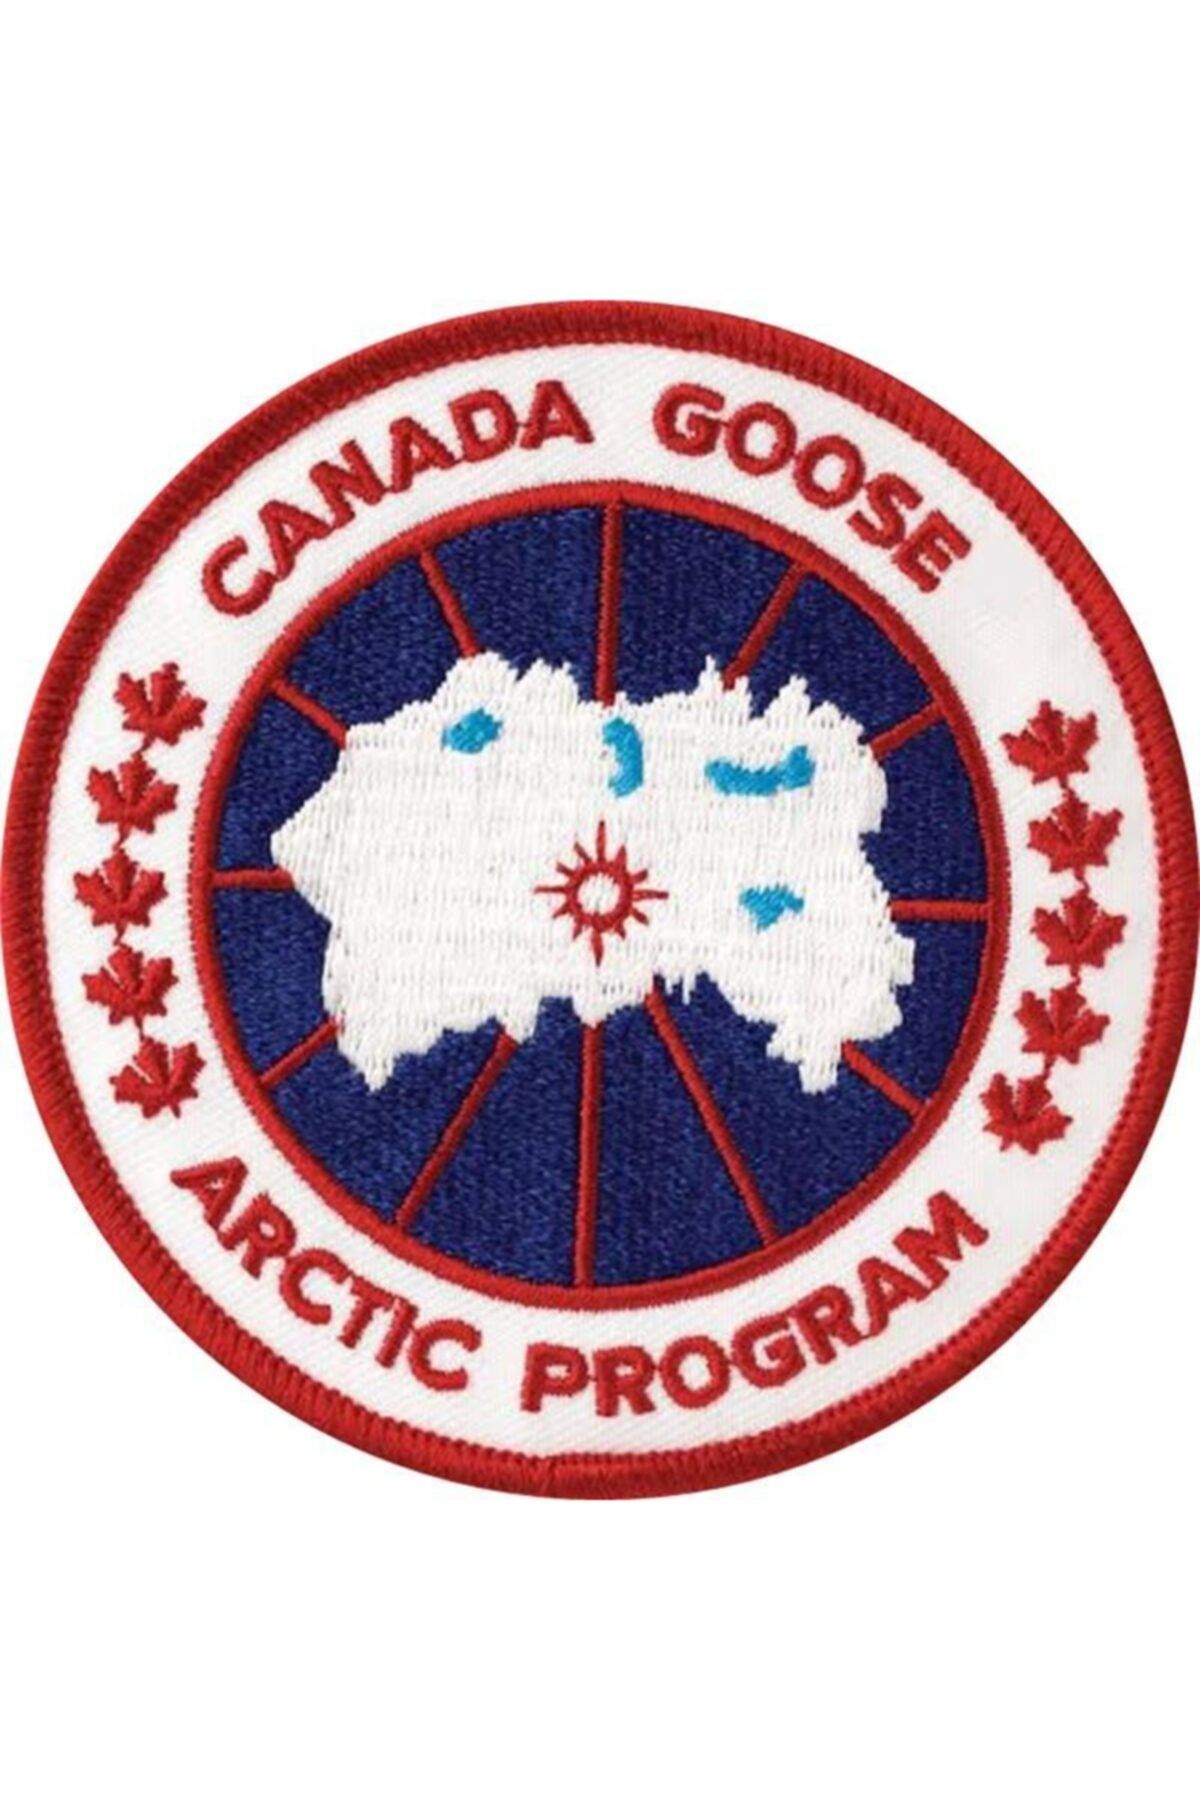 Sim Nakış Canada Goose Arctic Program Nakış Işleme Arma Patch Peç 9x9 Cm